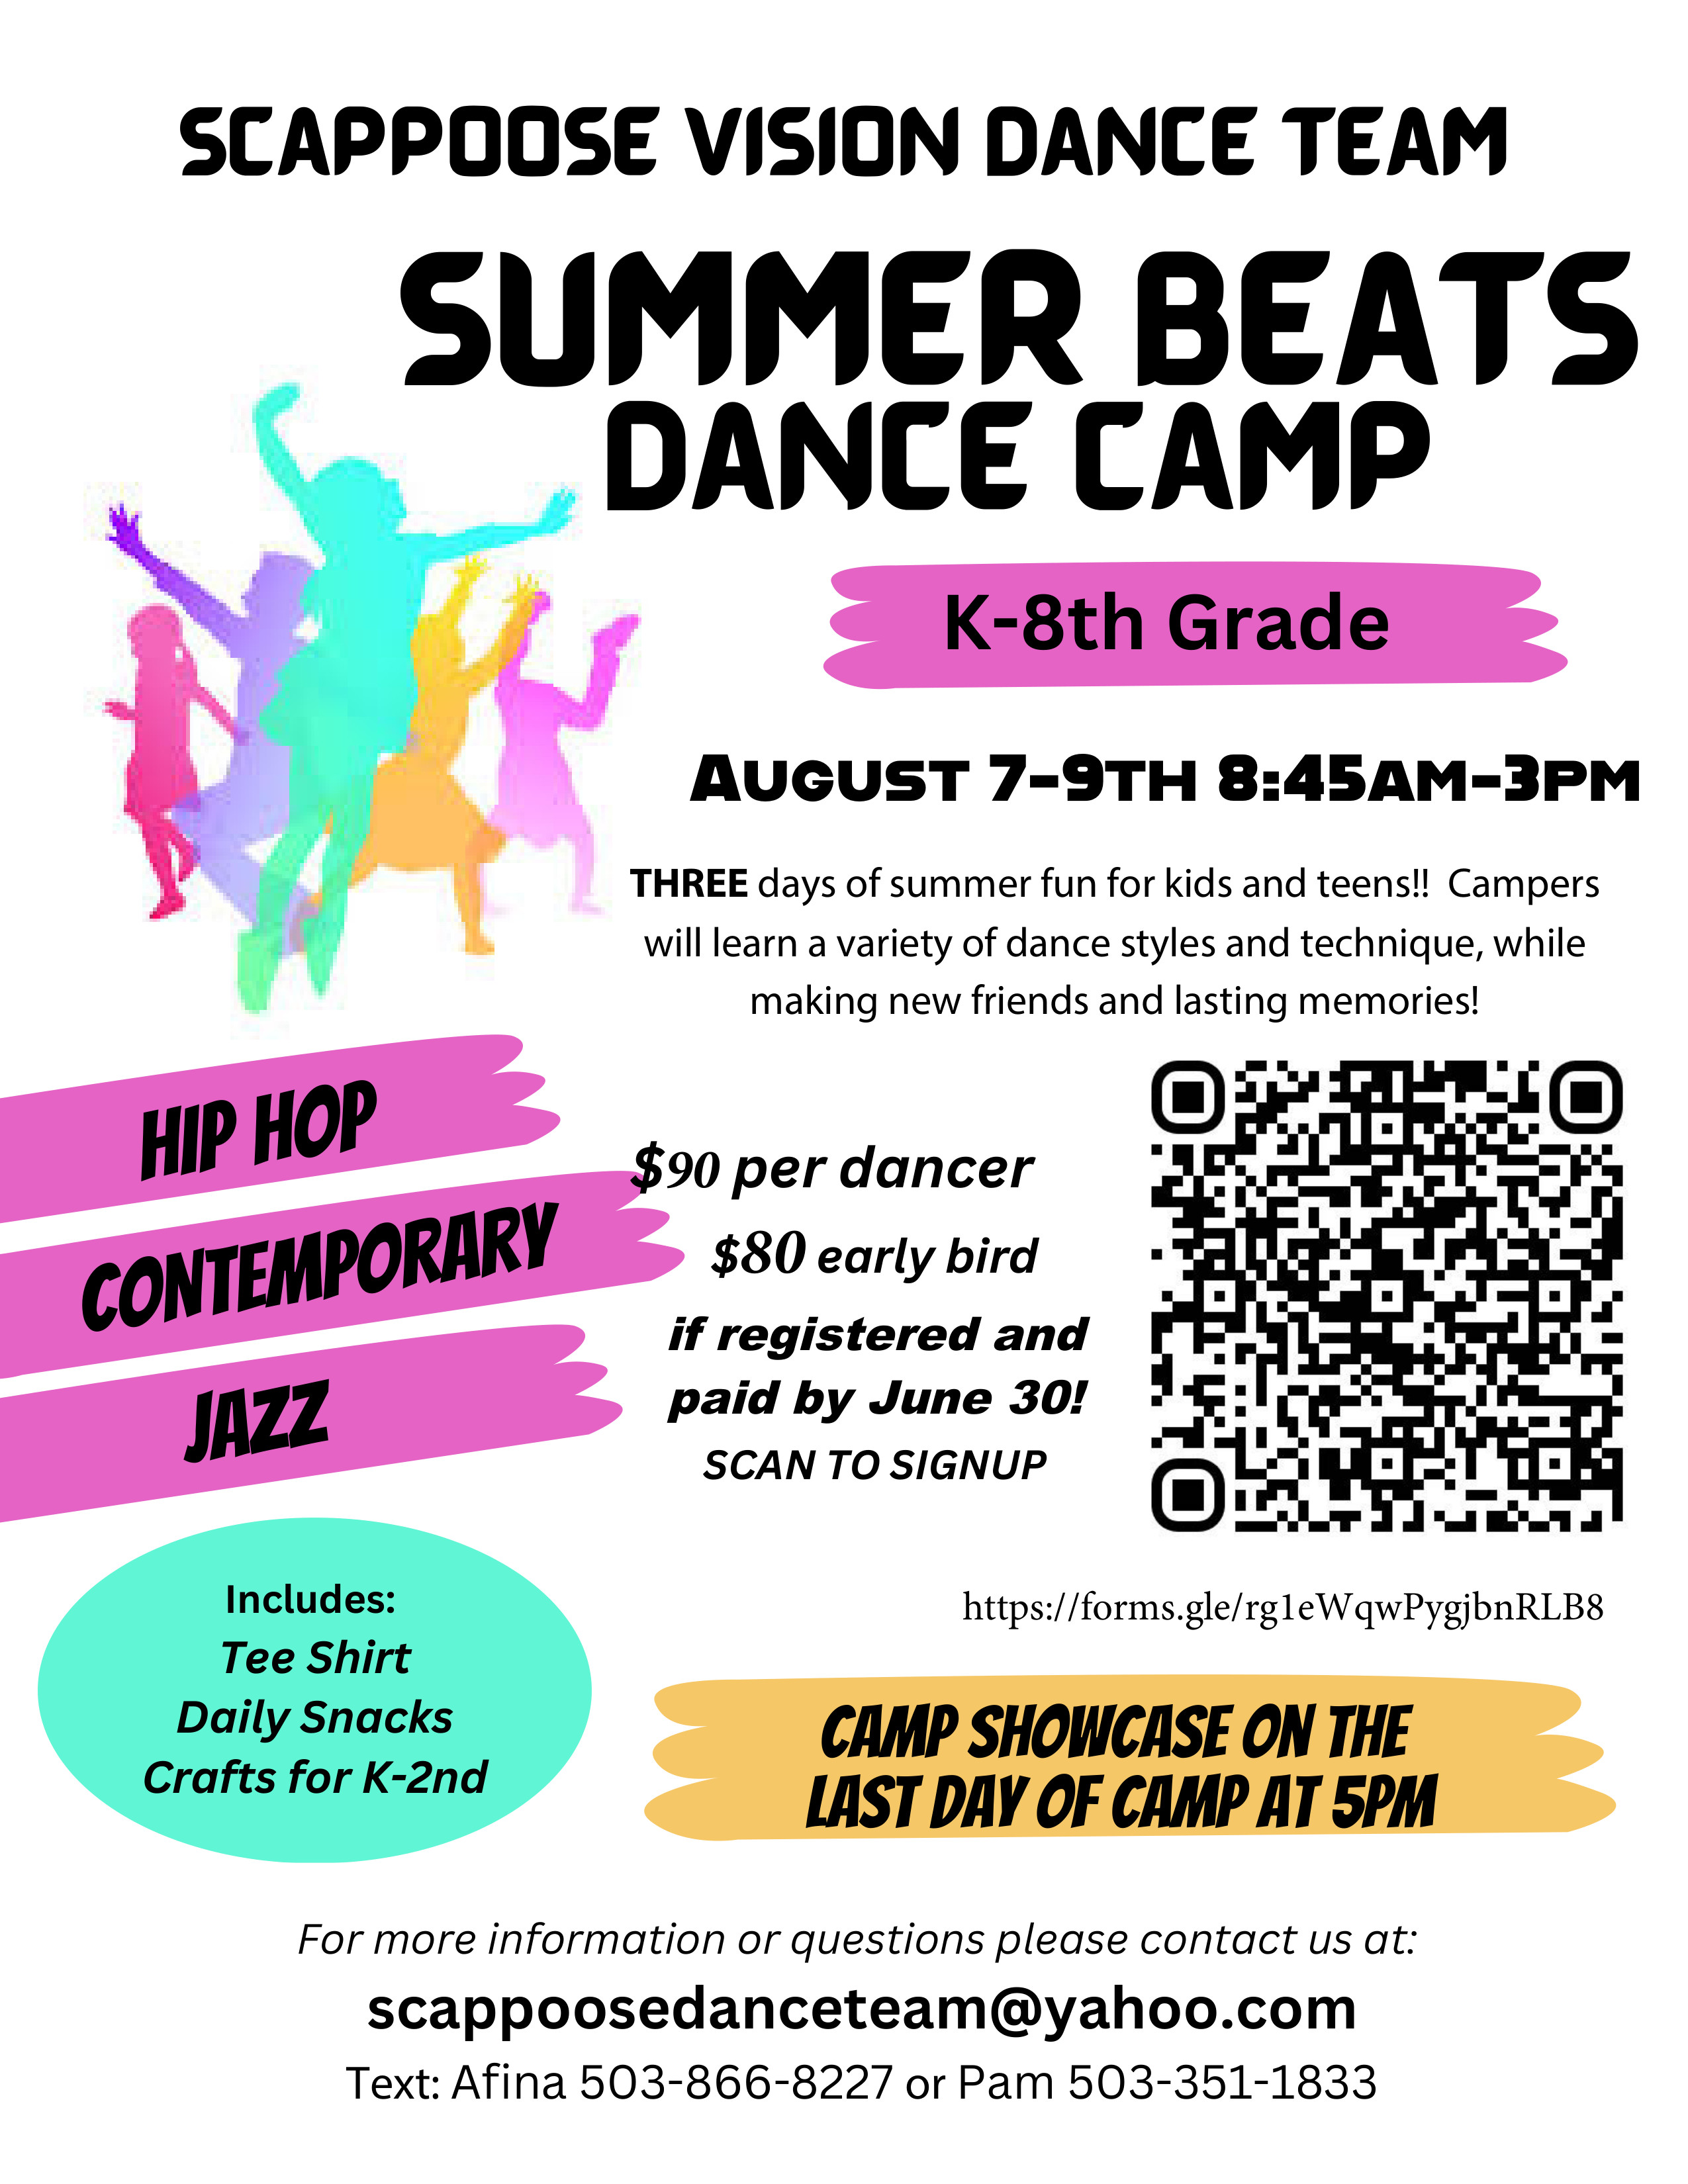 Scappoose Dance Team summer camp flyer